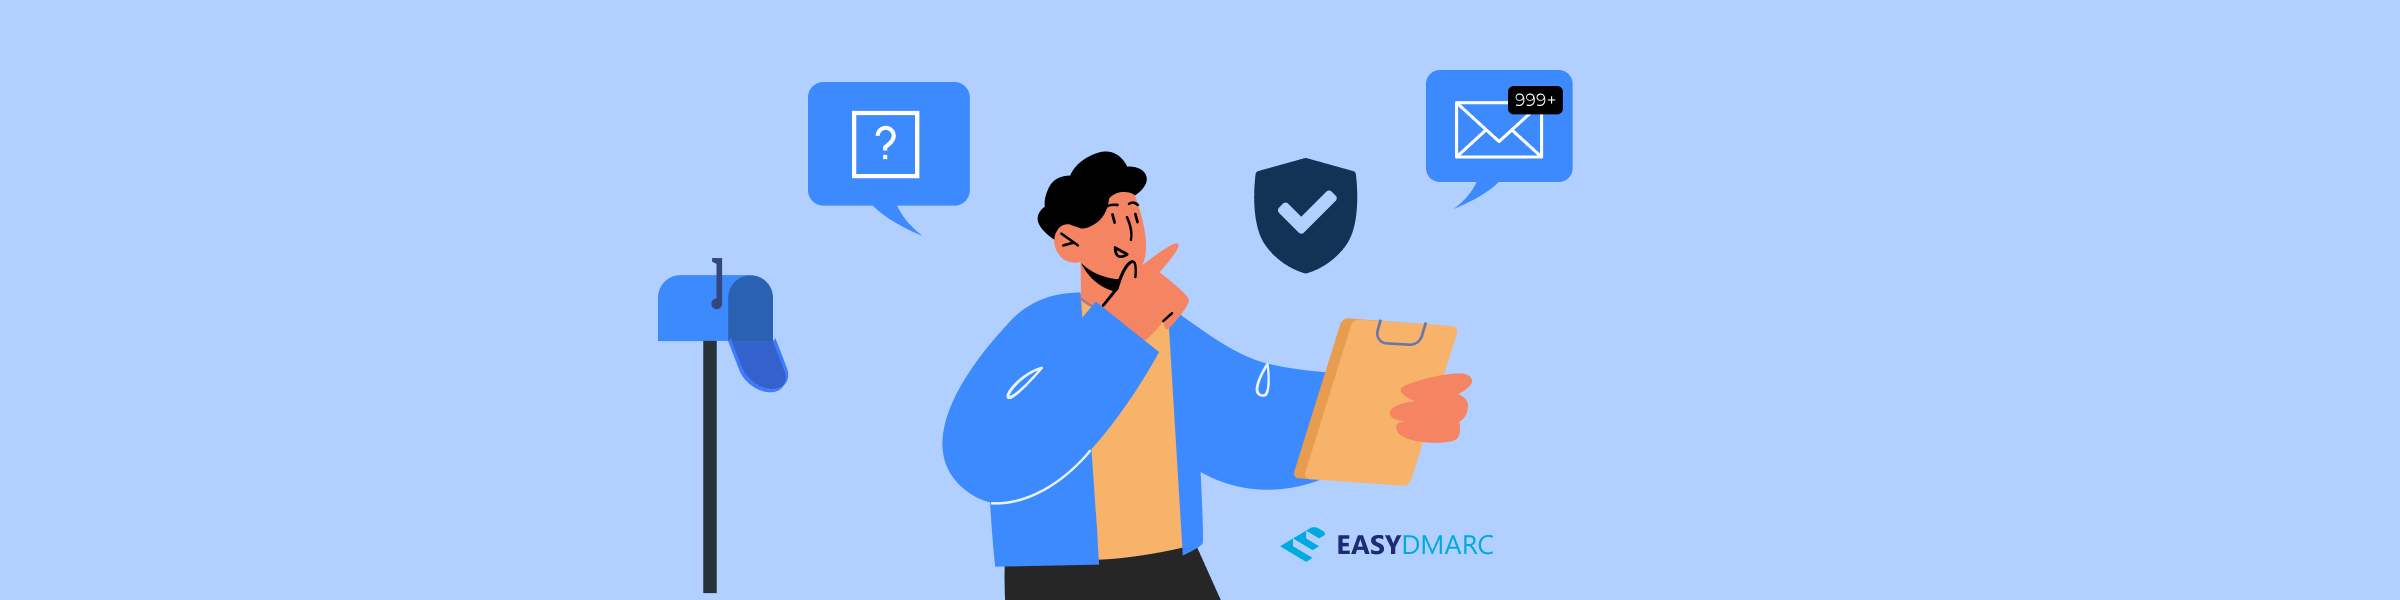 EasyDMARC FAQ: how to set up EasyDMARC